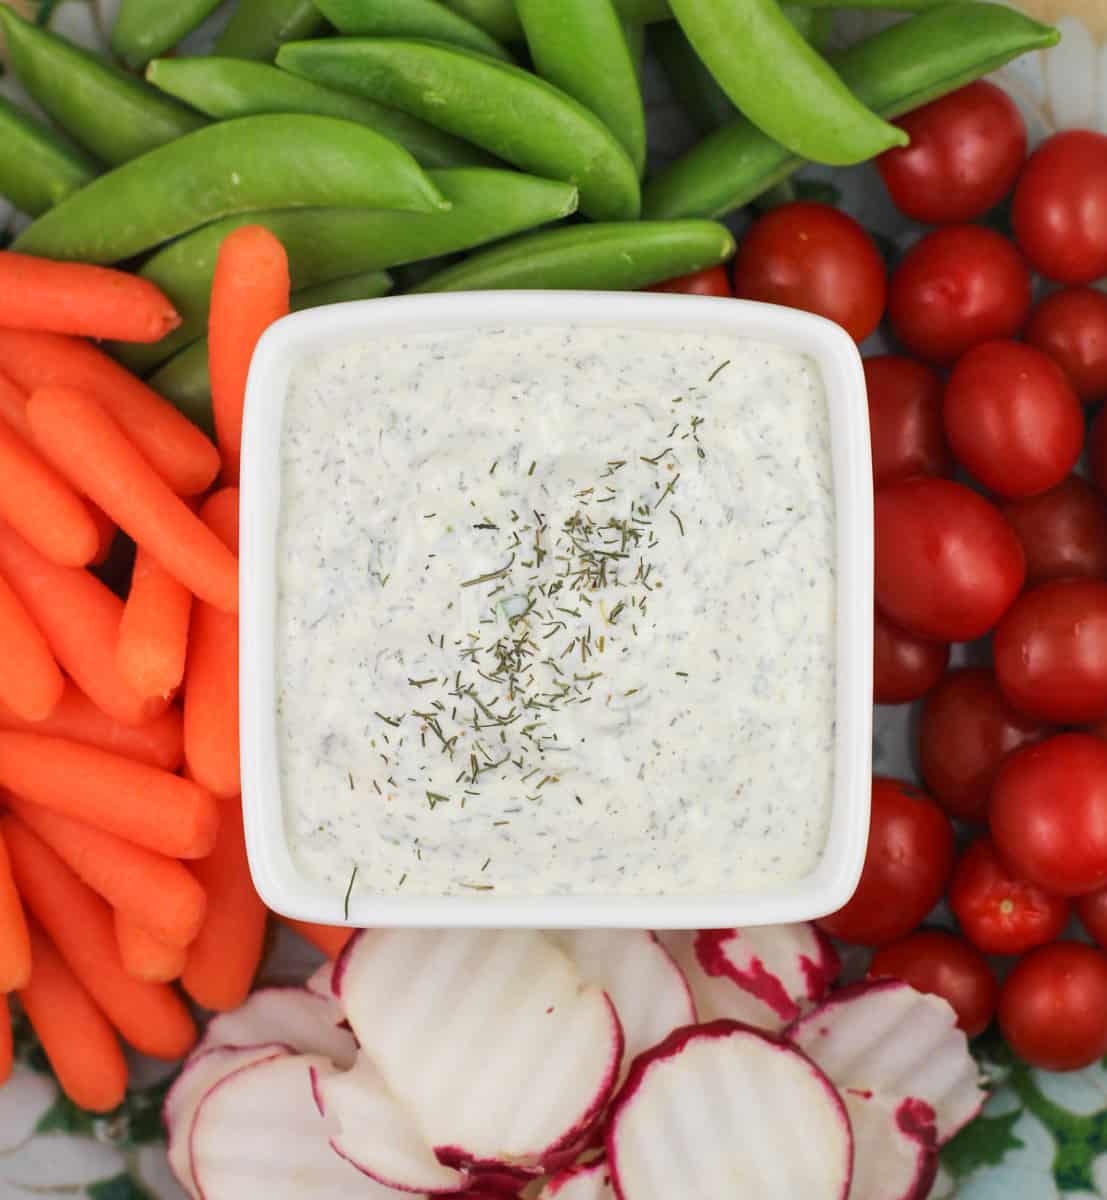 prepared veggie dip in small white dish in the center of vegetable platter